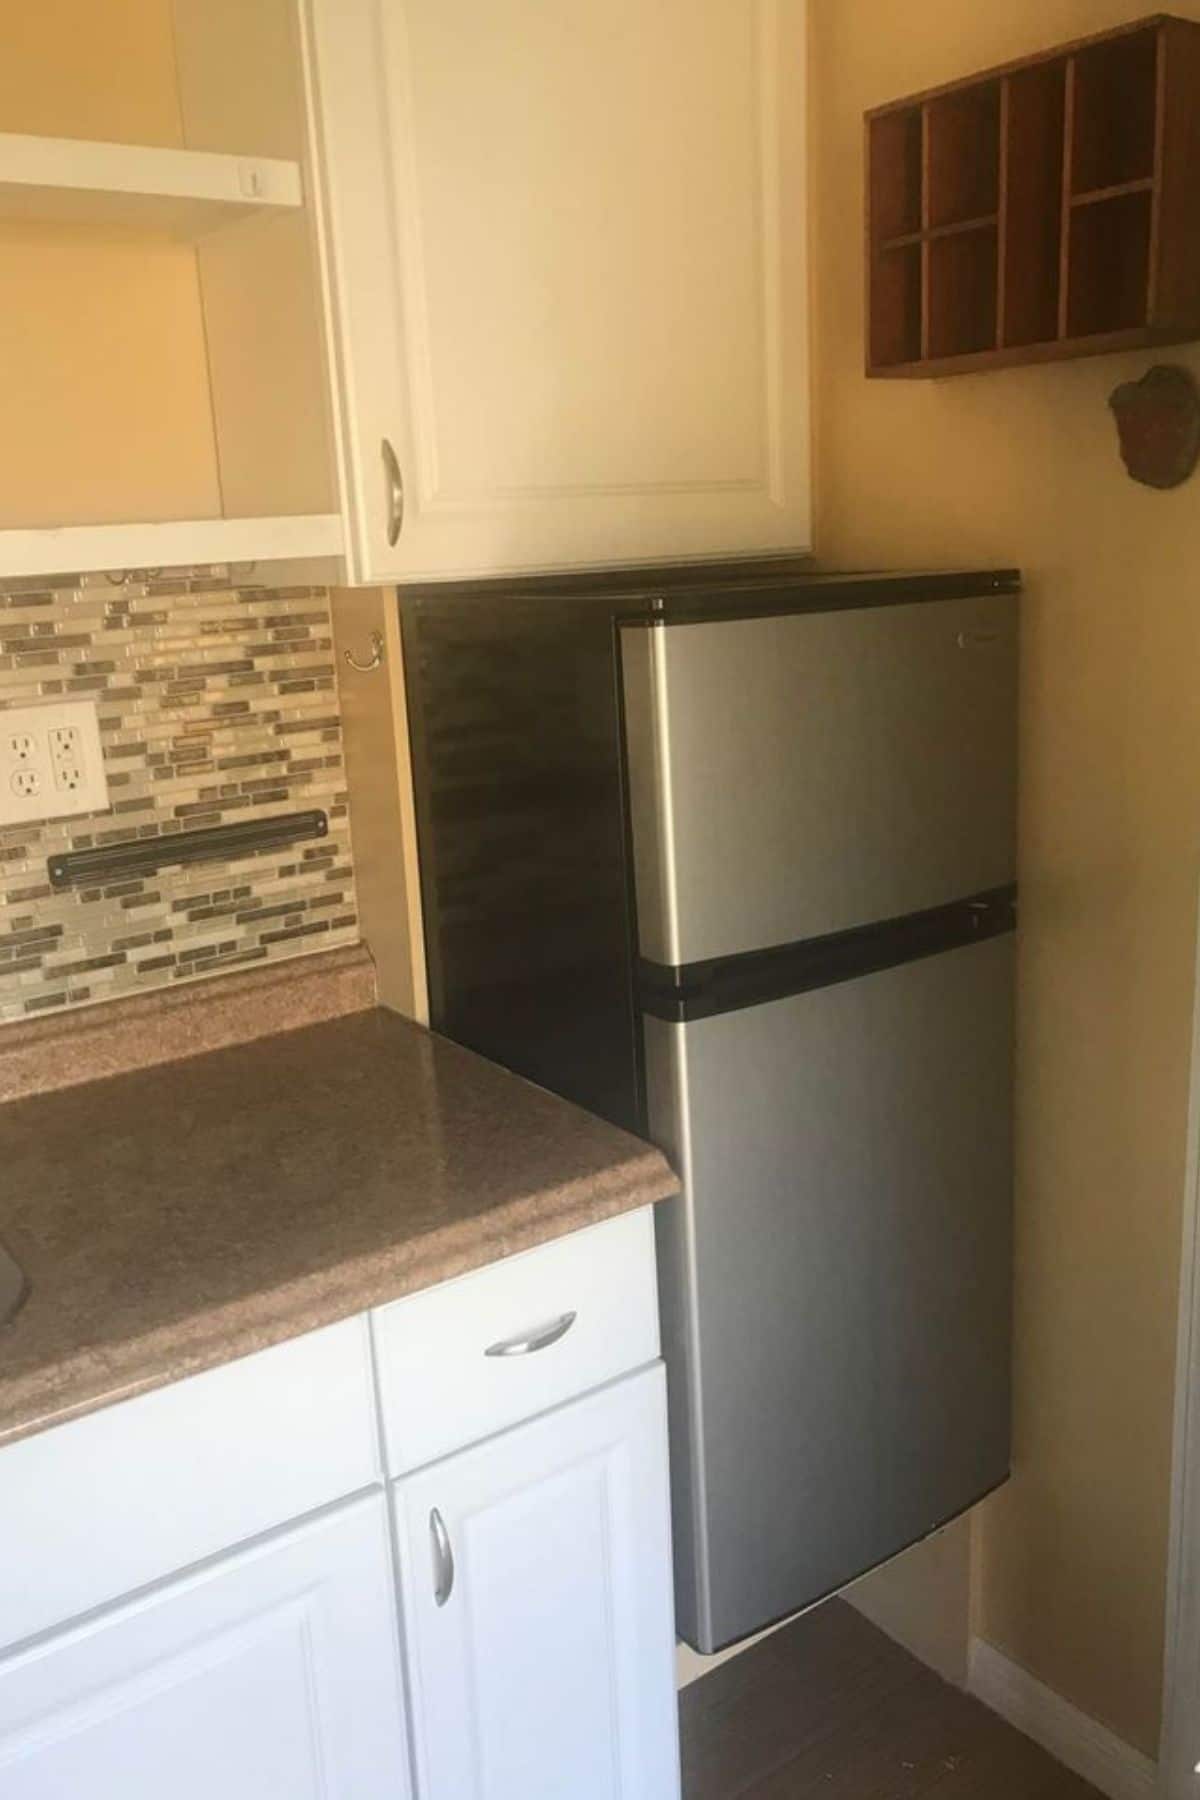 Small refrigerator next to kitchen cabinet